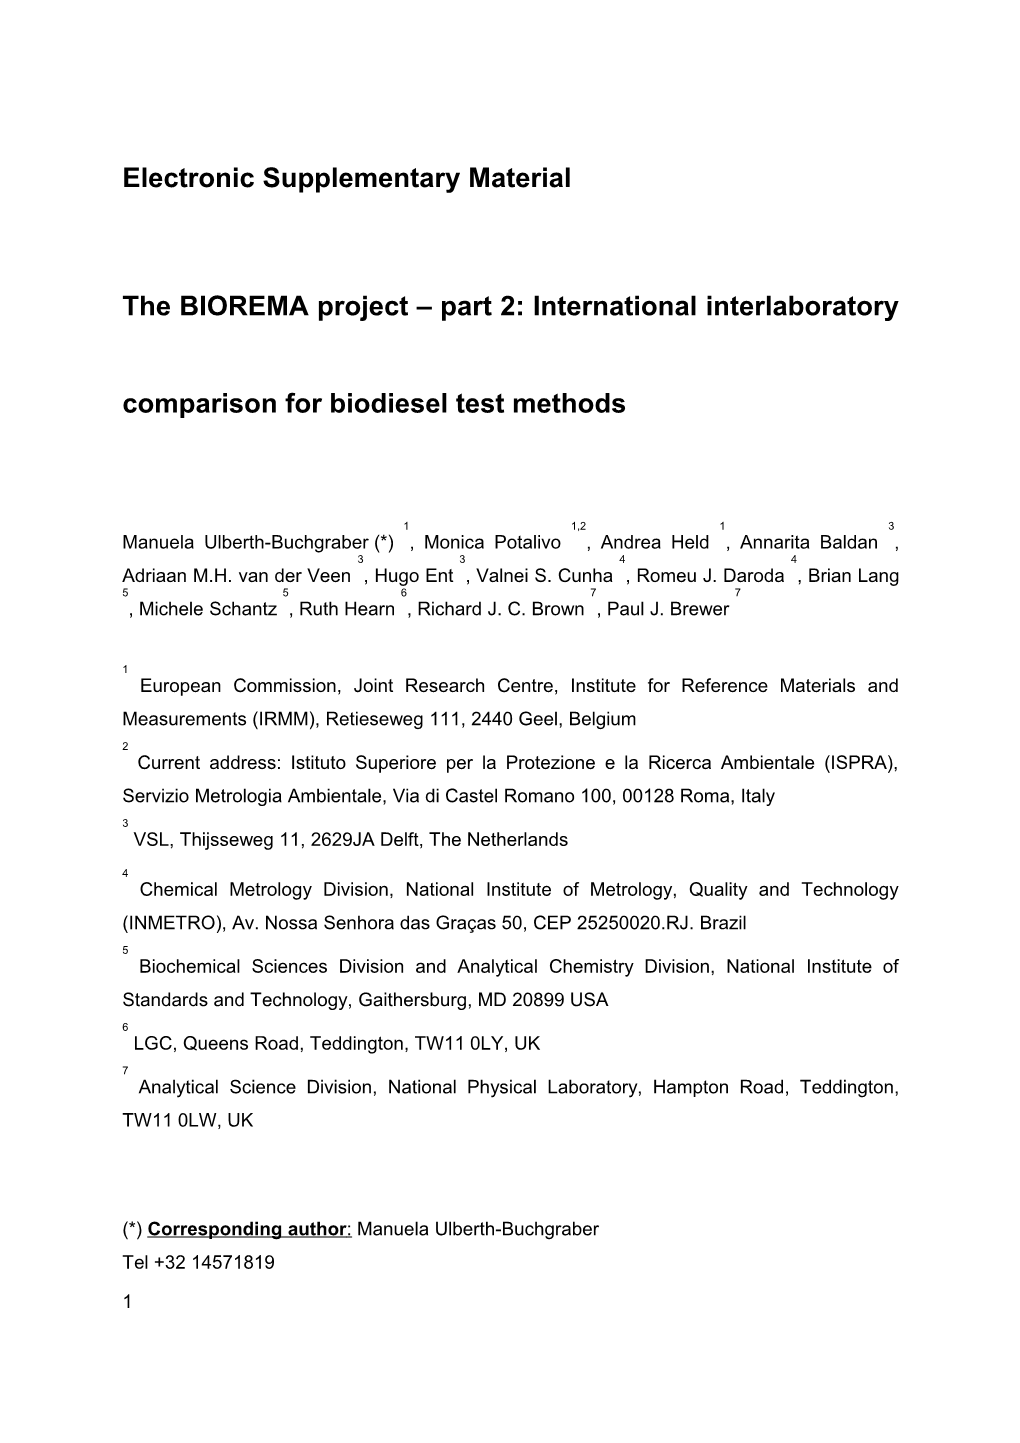 Interlaboratory Comparison for Biodiesel Test Methods